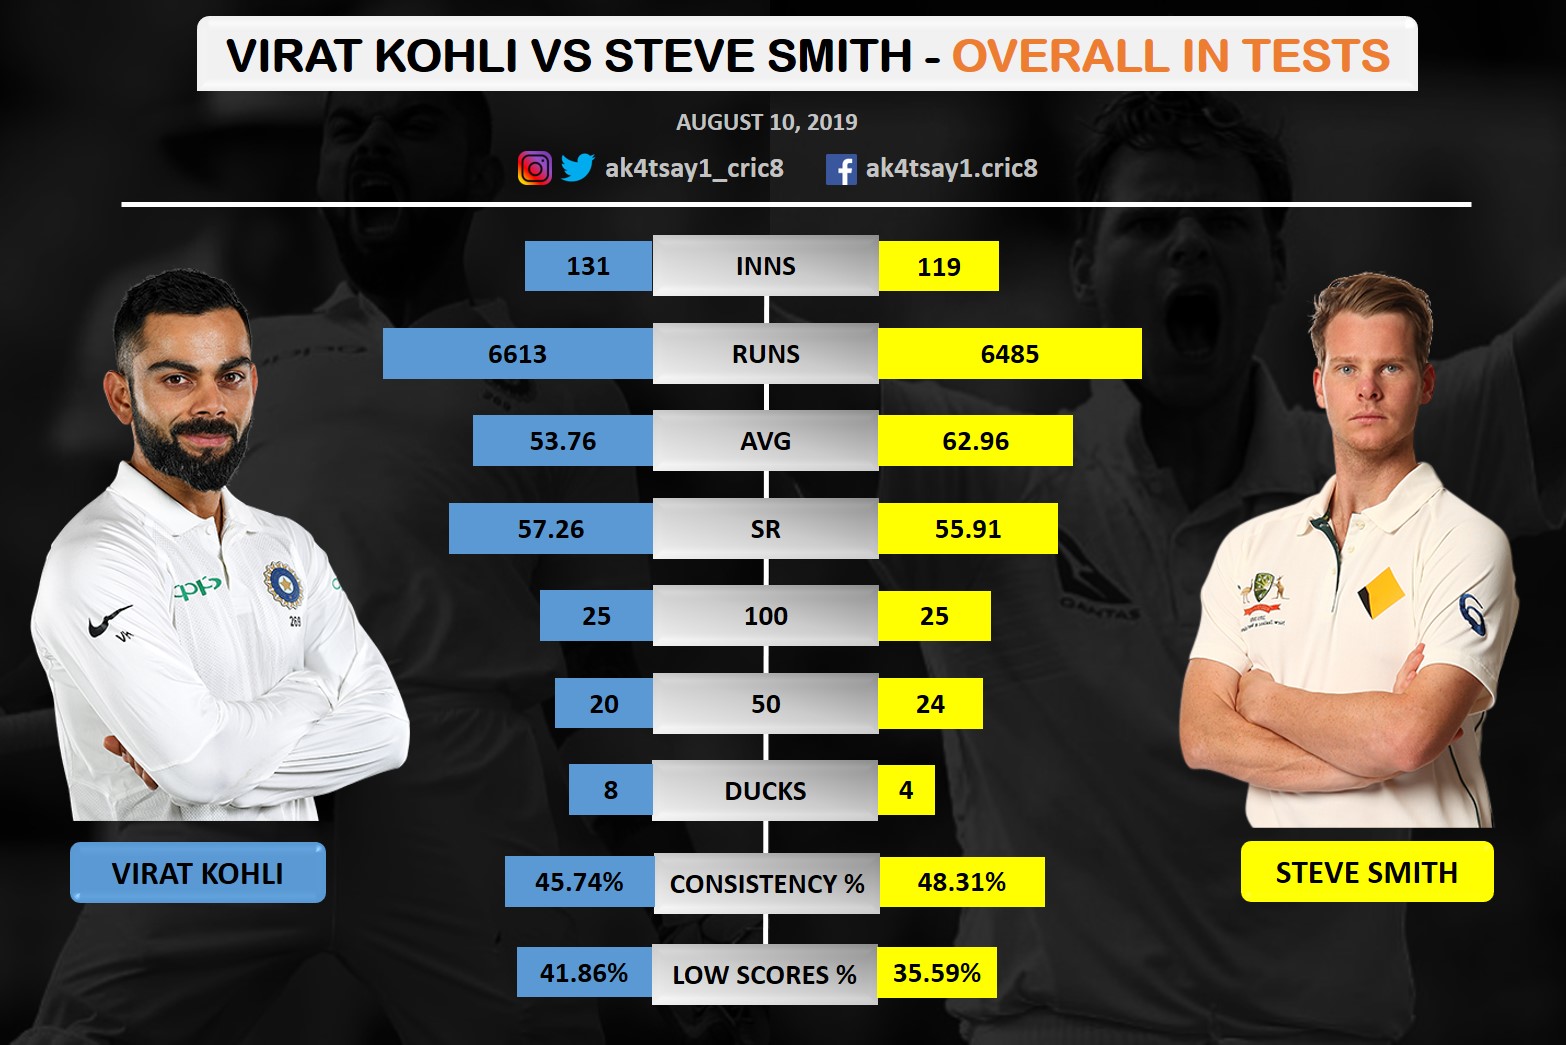 Virat Kohli vs Steve Smith overall in Tests